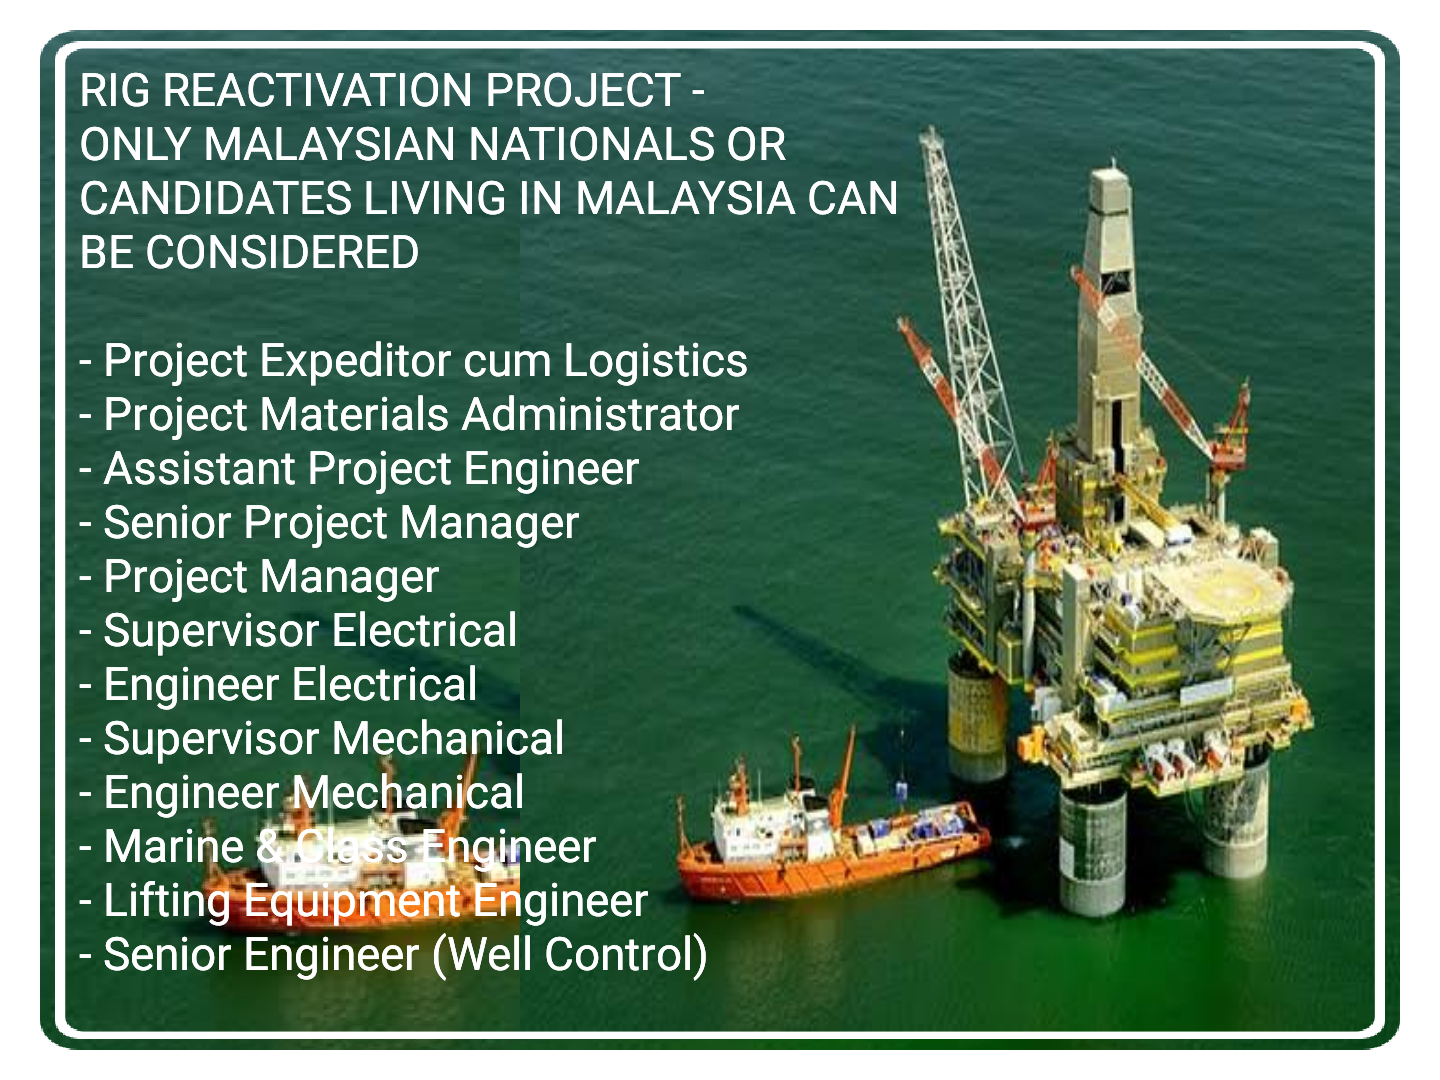 Rig Reactivation Project Jobs